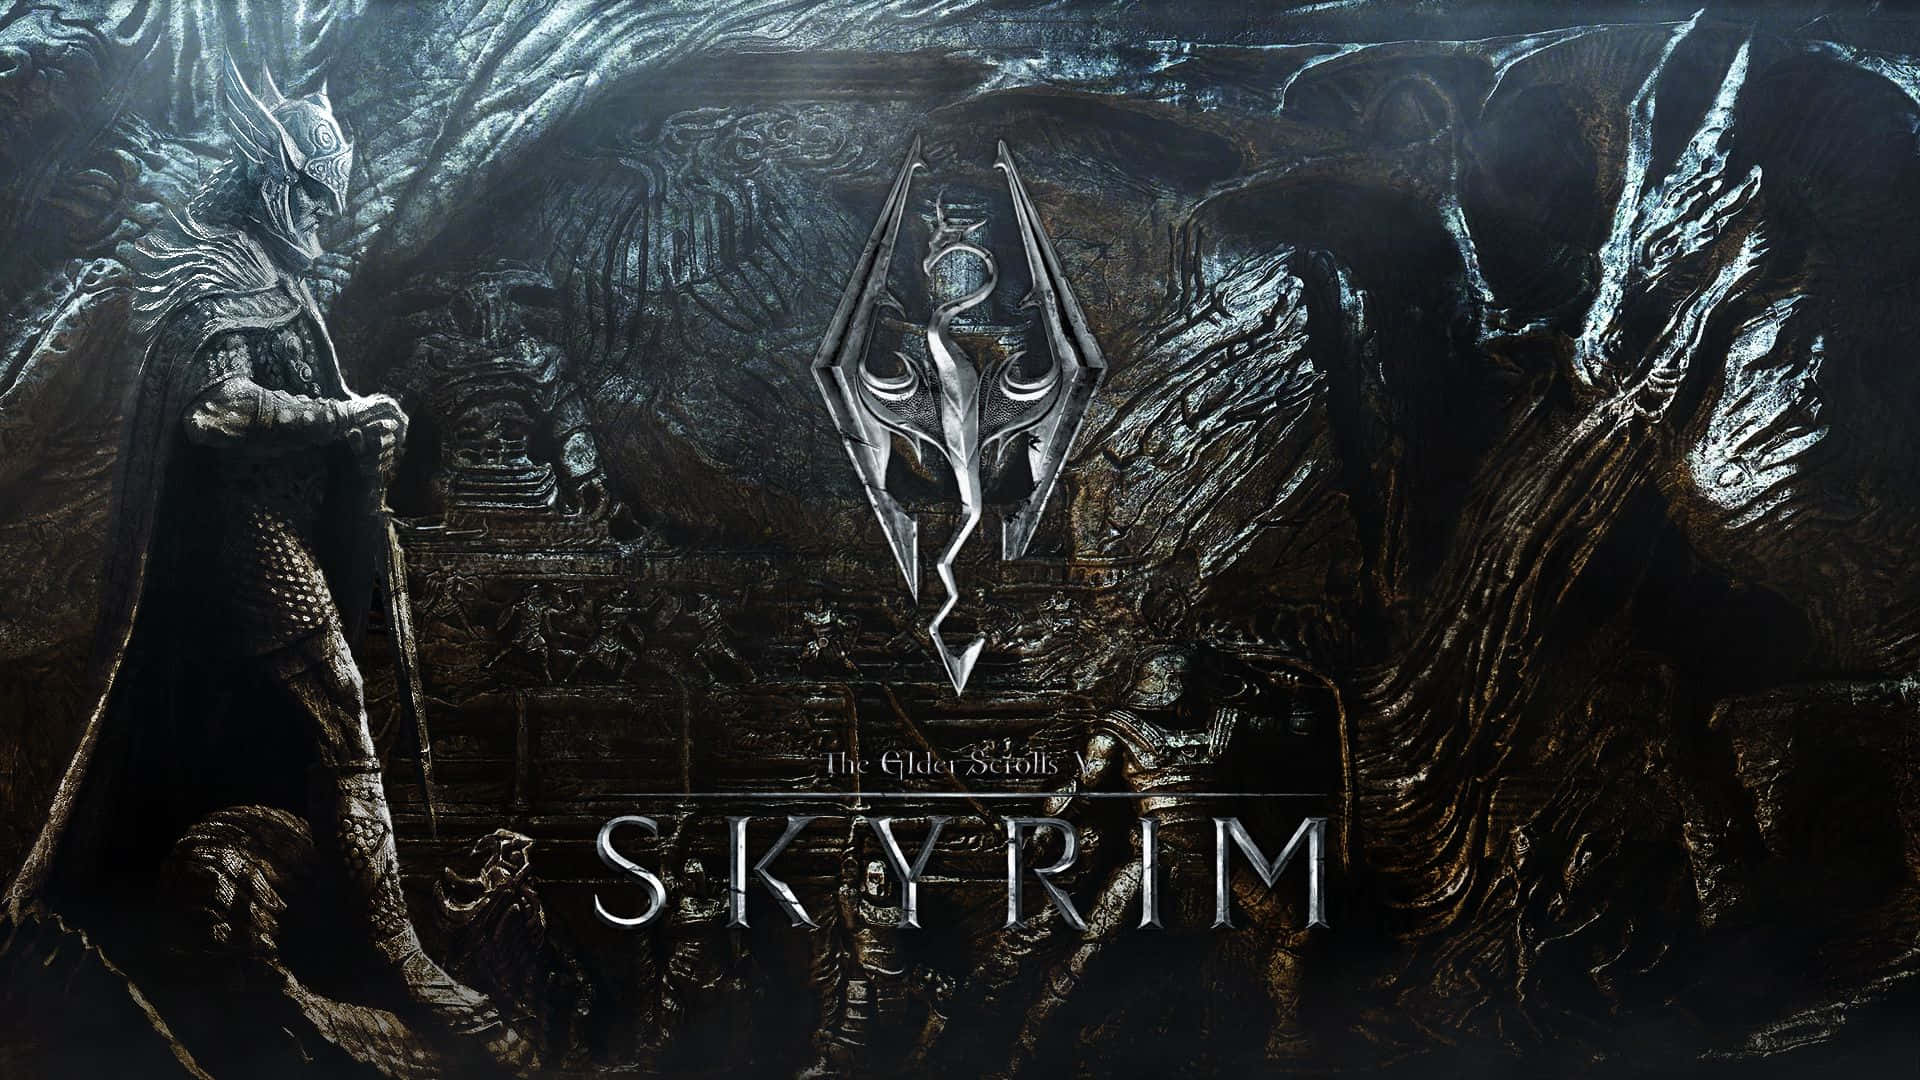 Epic Skyrim Landscape: The Dragonborn's Adventure Awaits